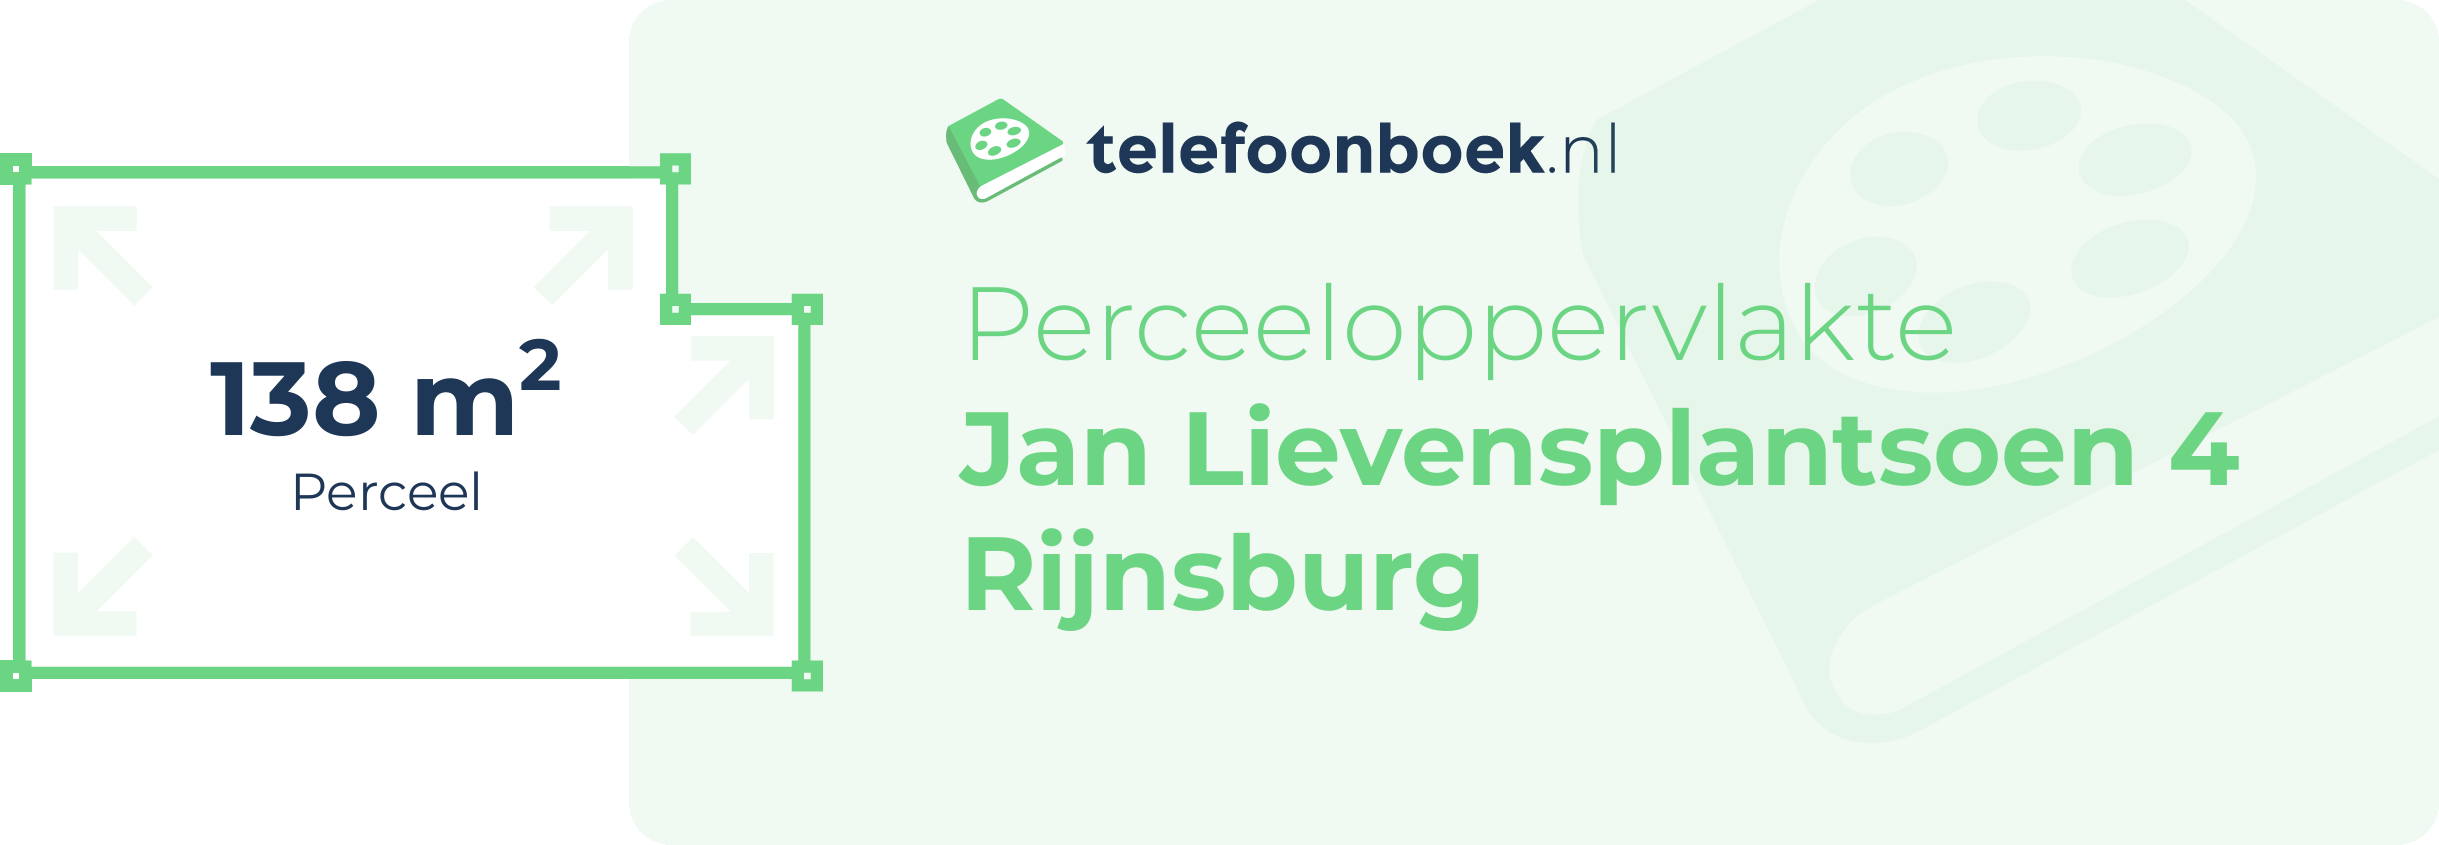 Perceeloppervlakte Jan Lievensplantsoen 4 Rijnsburg